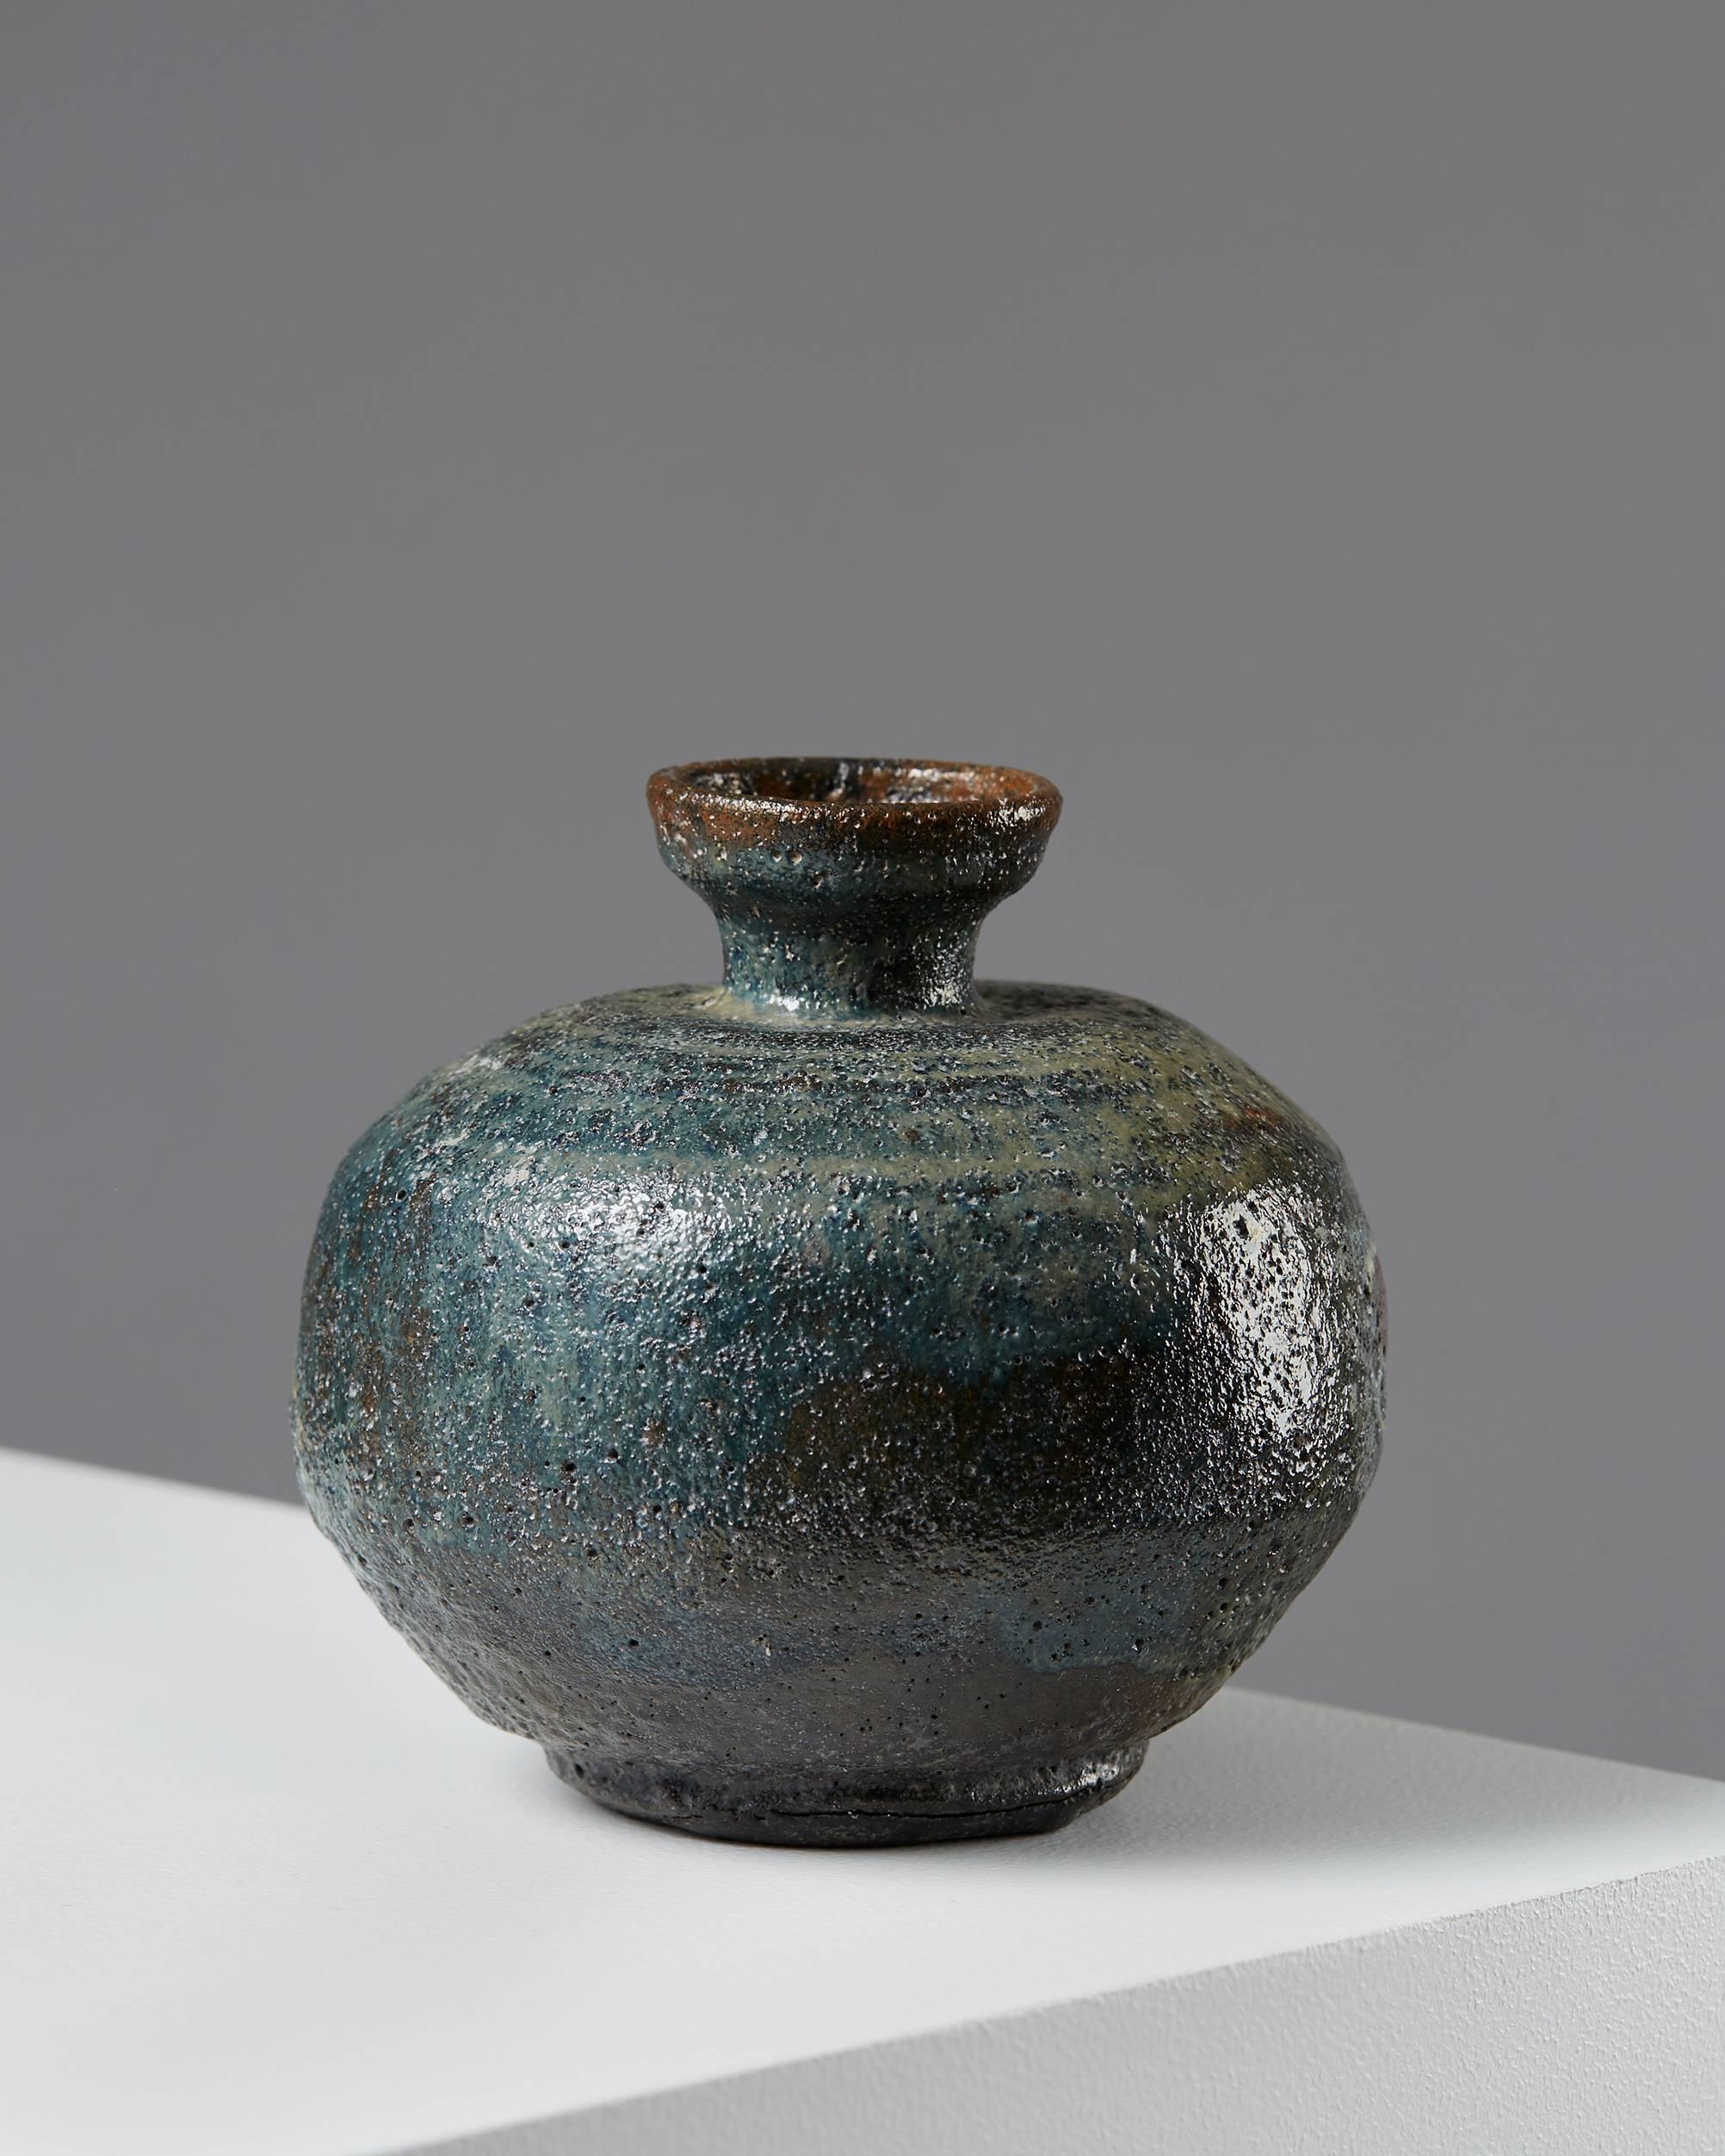 Vase designed by Gutte Eriksen, 
Denmark, 1980s.
Stoneware.
Measures:
H 13 cm/ 5